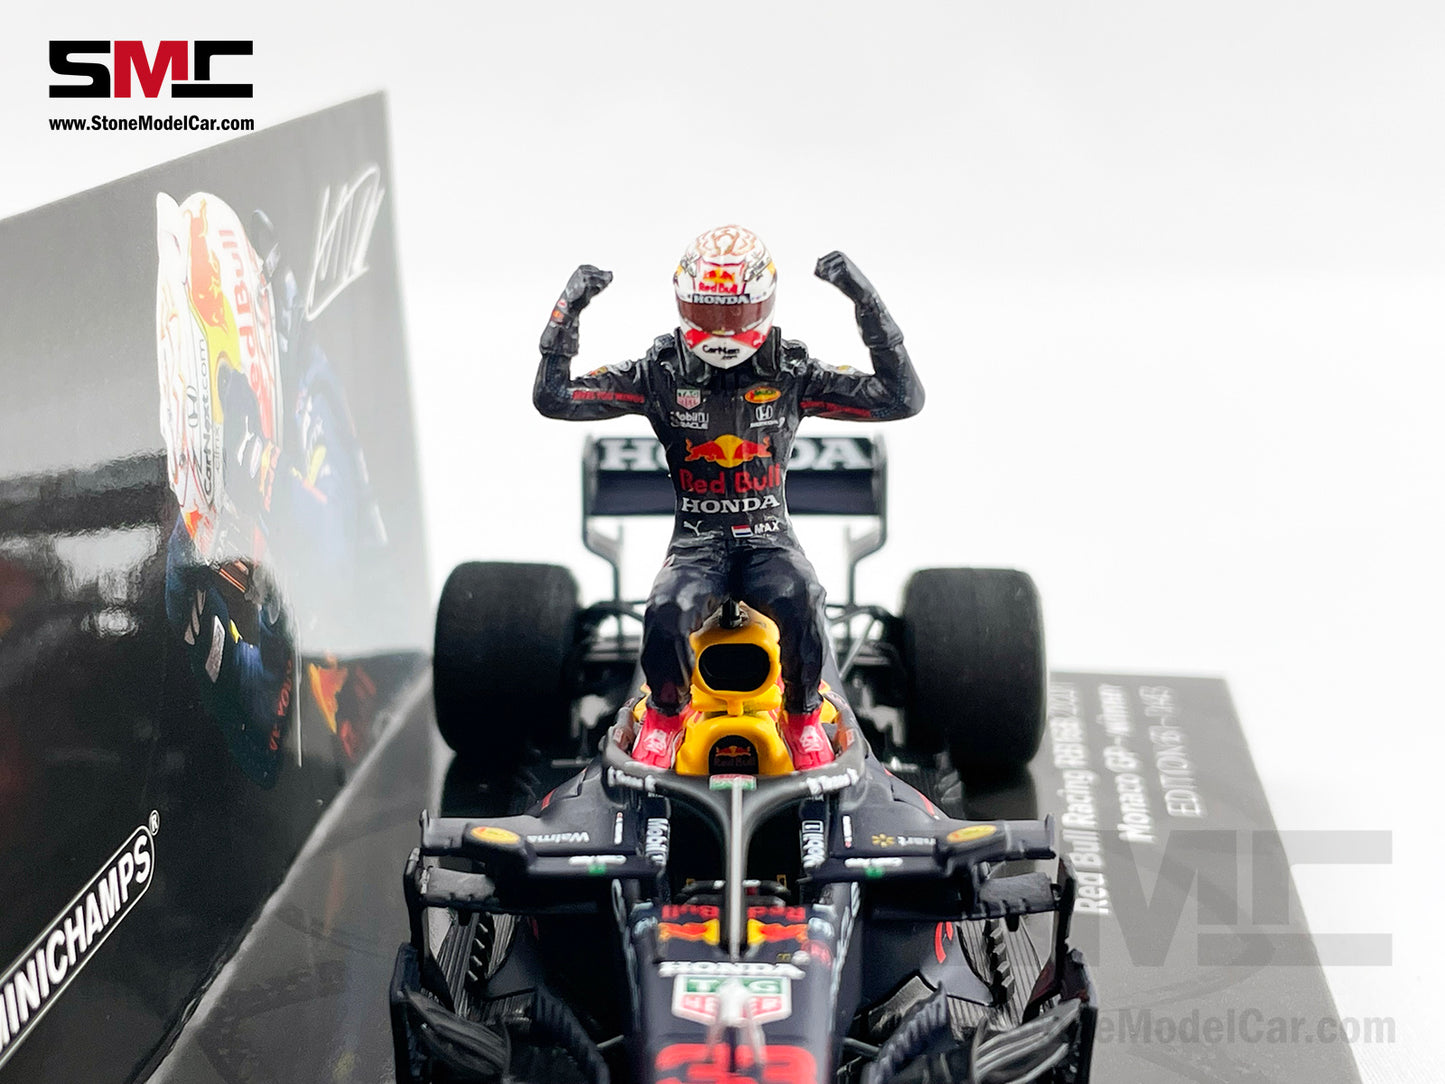 2021 F1 World Champion #33 Max Verstappen Red Bull RB16B Monaco GP 1:43 MINICHAMPS with Figure